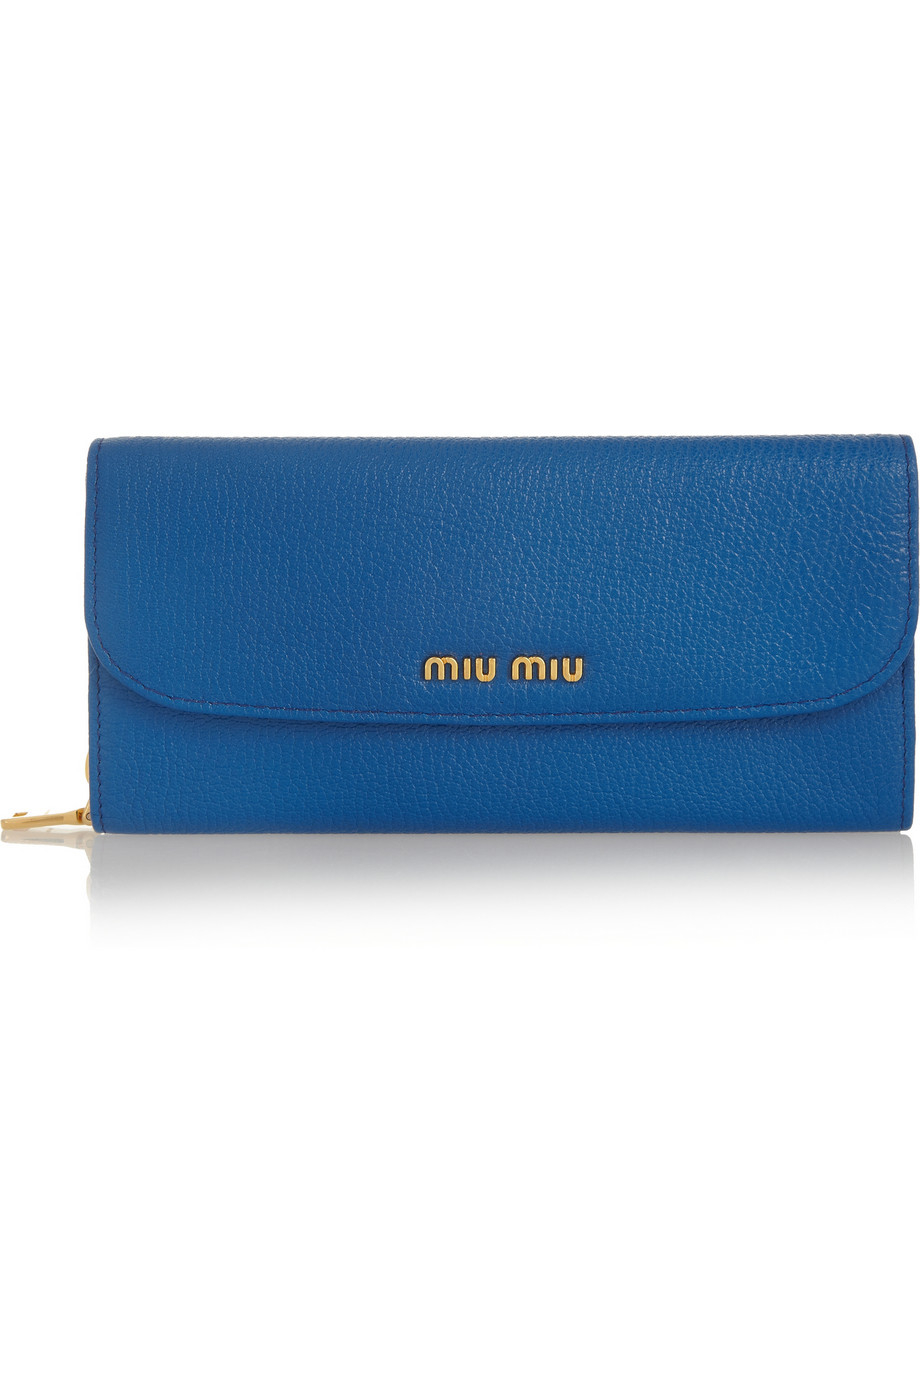 Miu Miu Leather Wallet in Blue | Lyst